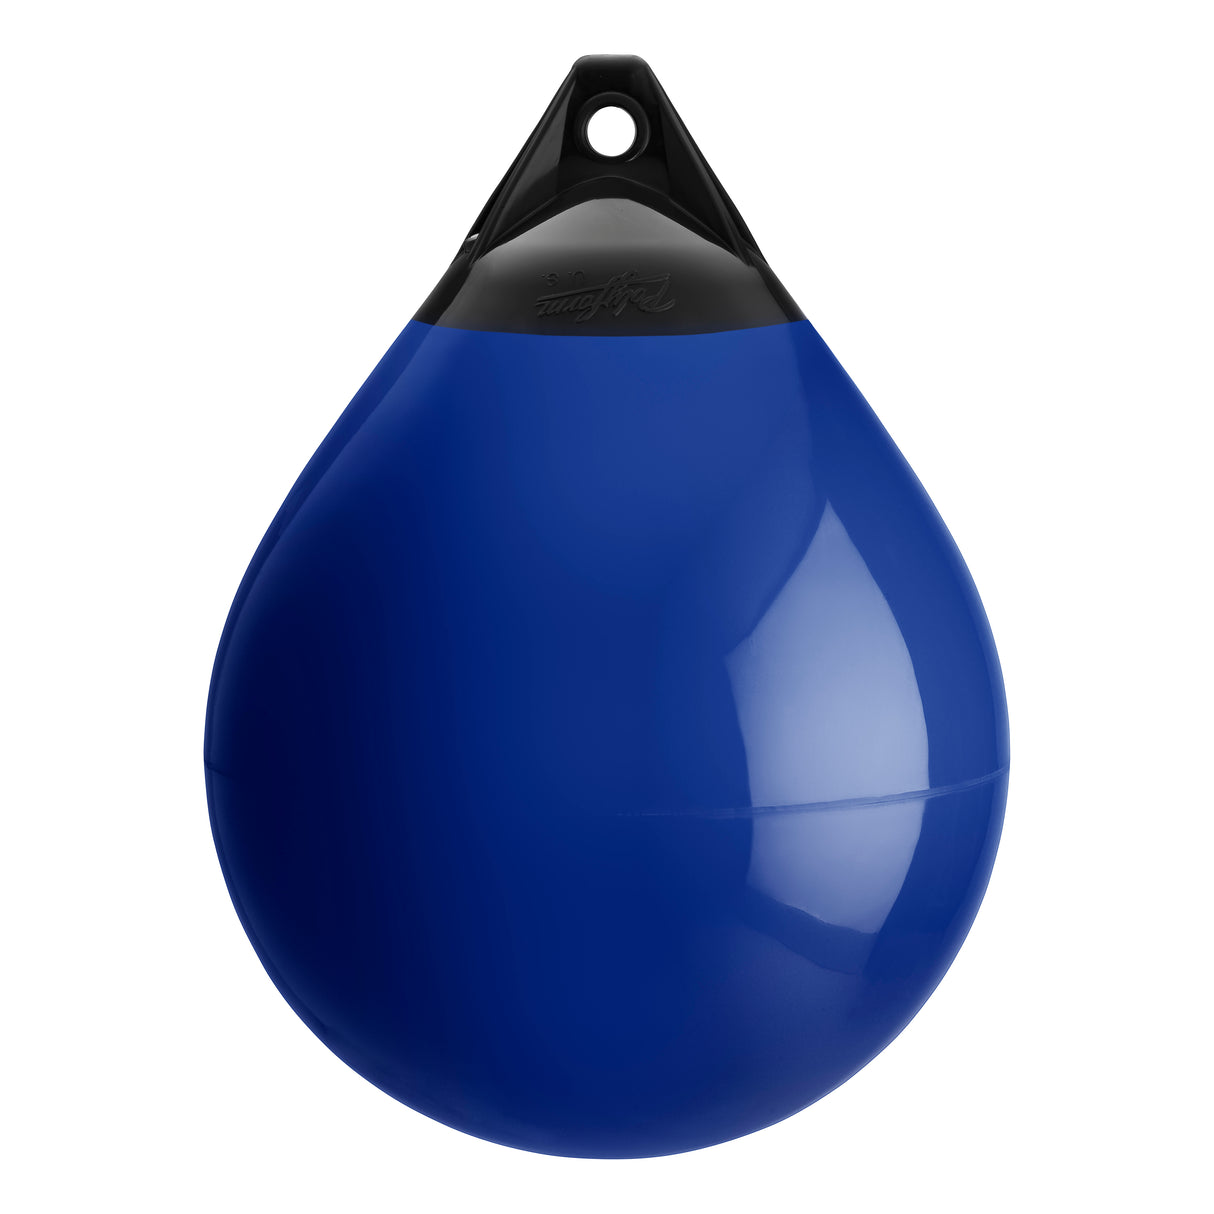 Cobalt Blue buoy with Black-Top, Polyform A-4